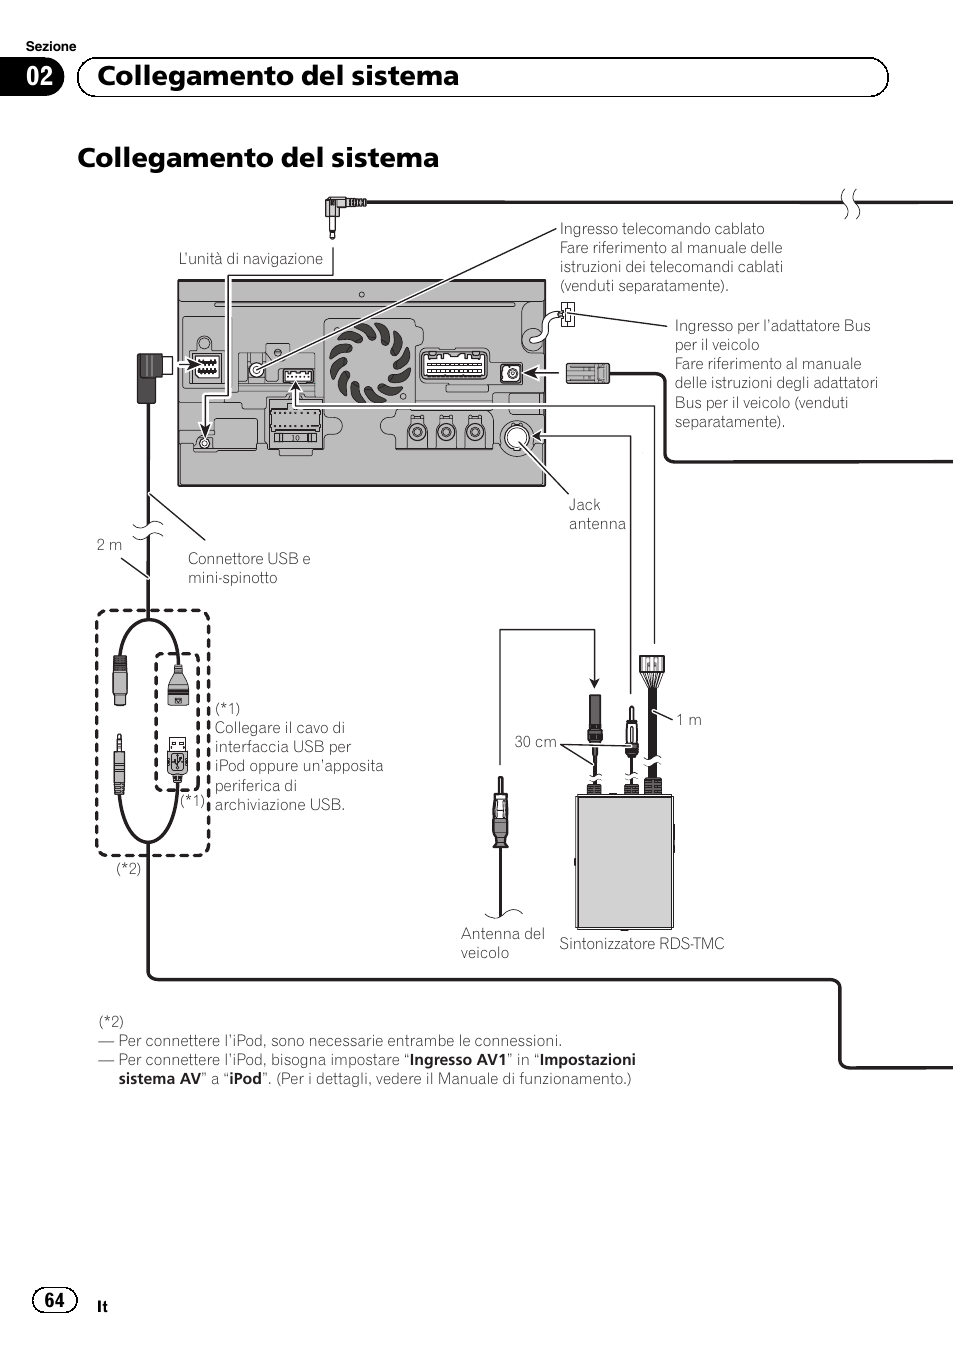 Collegamento del sistema, 02 collegamento del sistema | Pioneer AVIC-F30BT  User Manual | Page 64 / 172 | Original mode